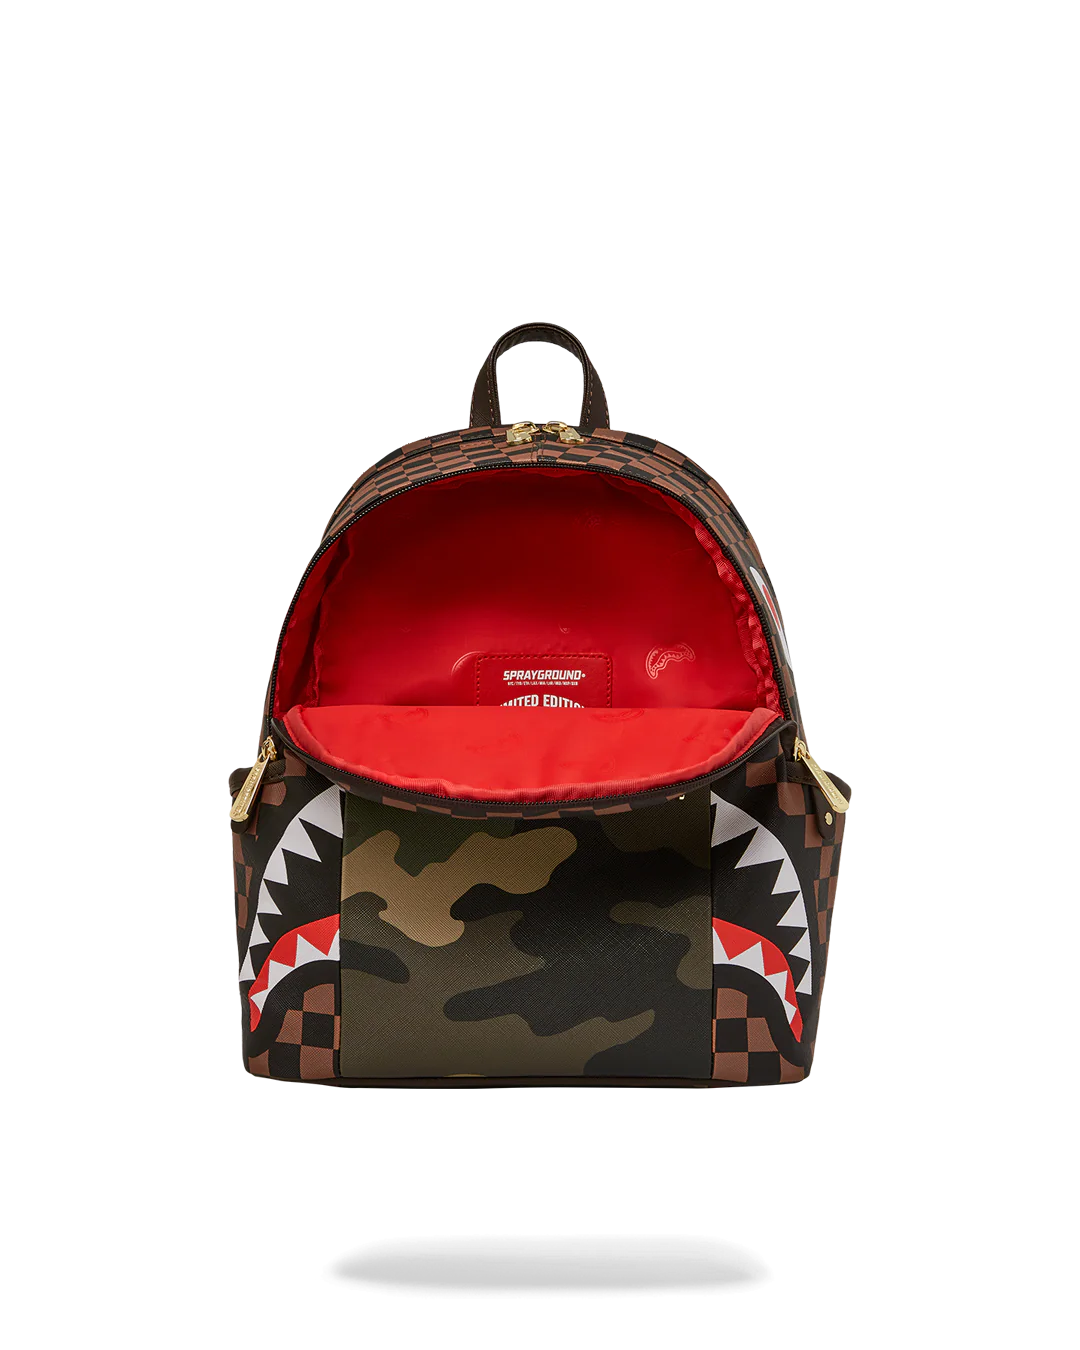 Louis Vuitton Handbag Monogram Duffel Bags PNG, Clipart, Accessories,  Backpack, Bag, Beige, Black Friday Free PNG